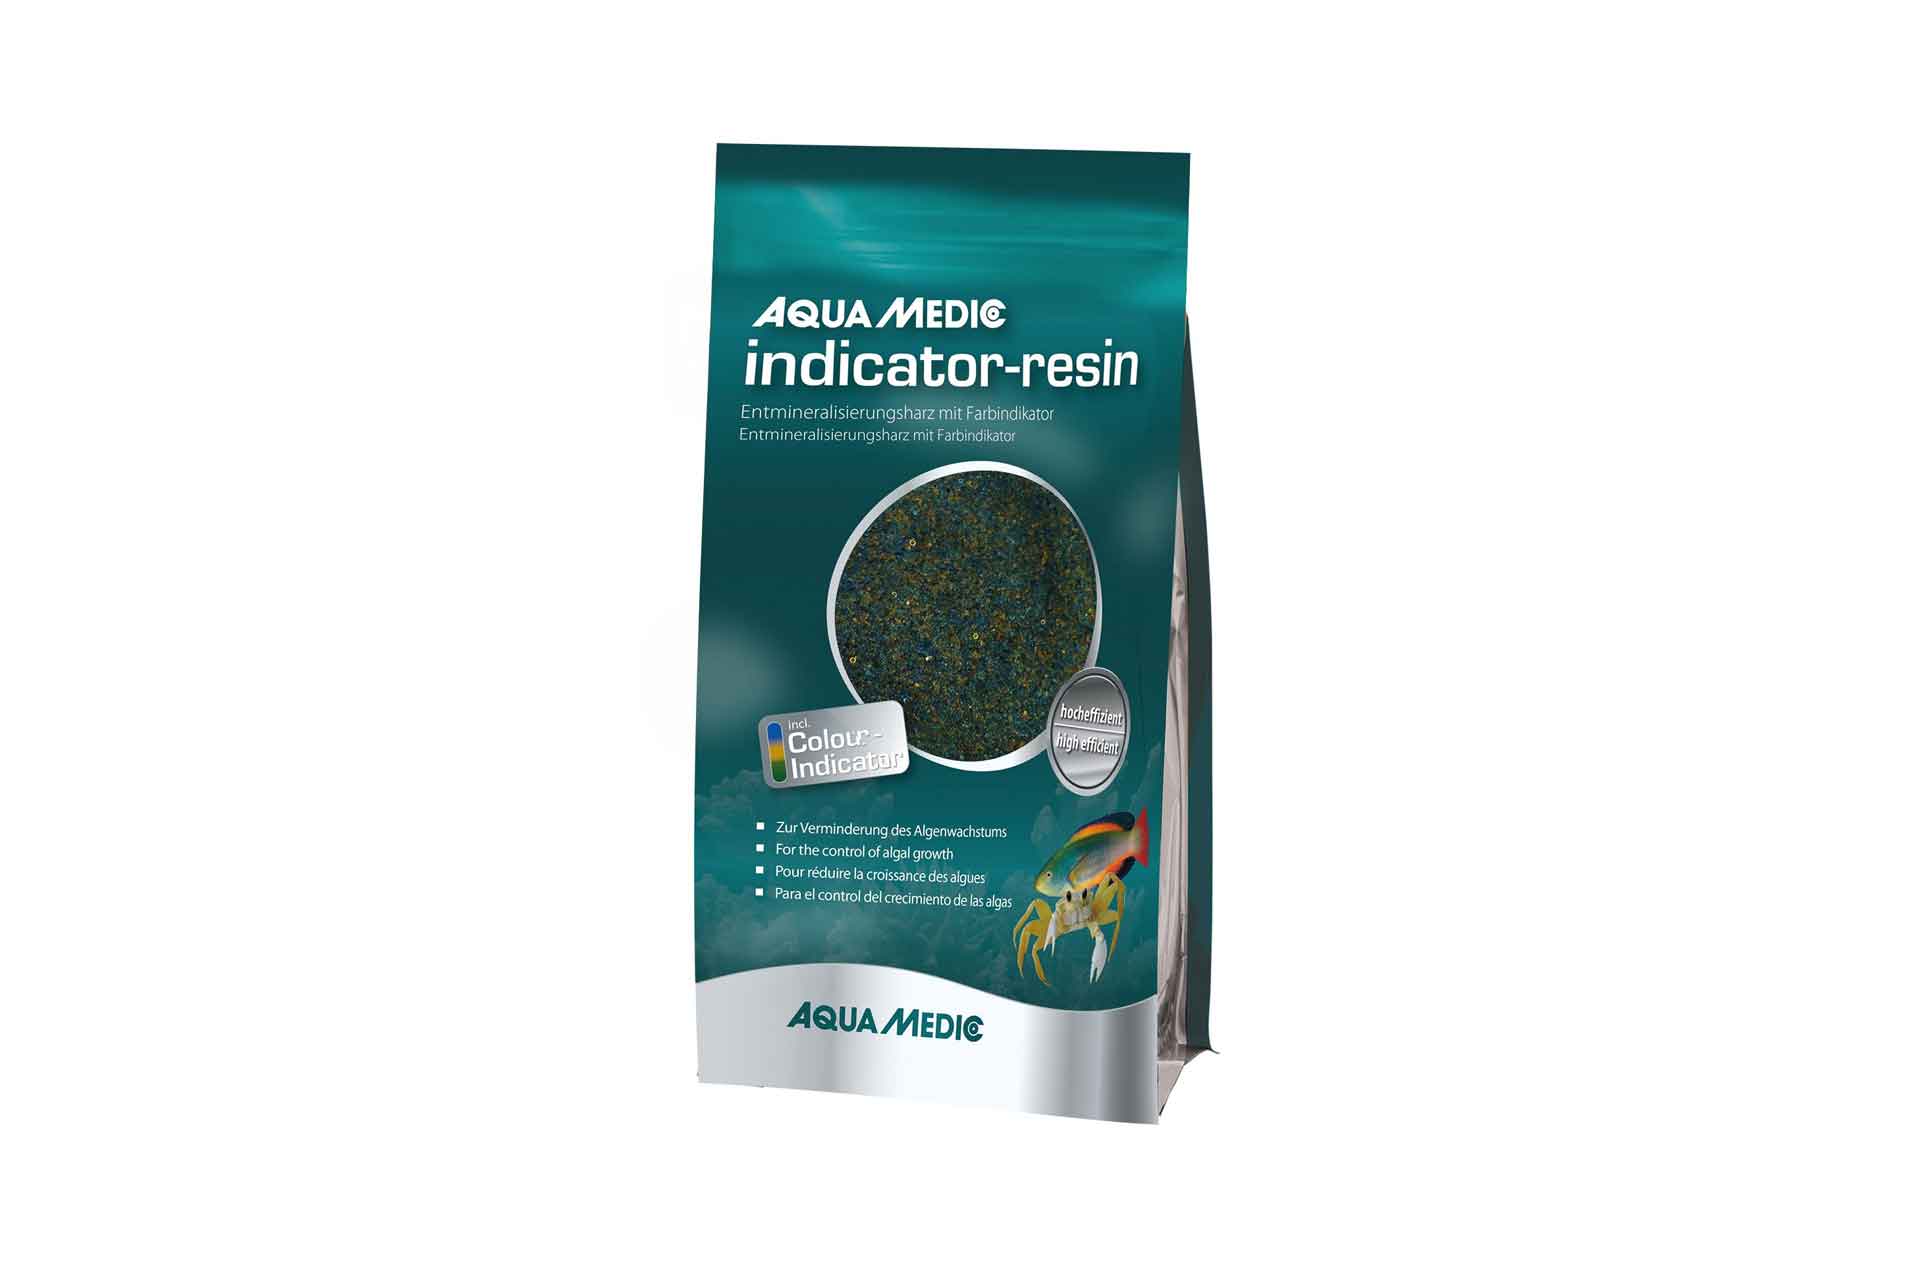 Aqua Medic indicator-resin 730 g